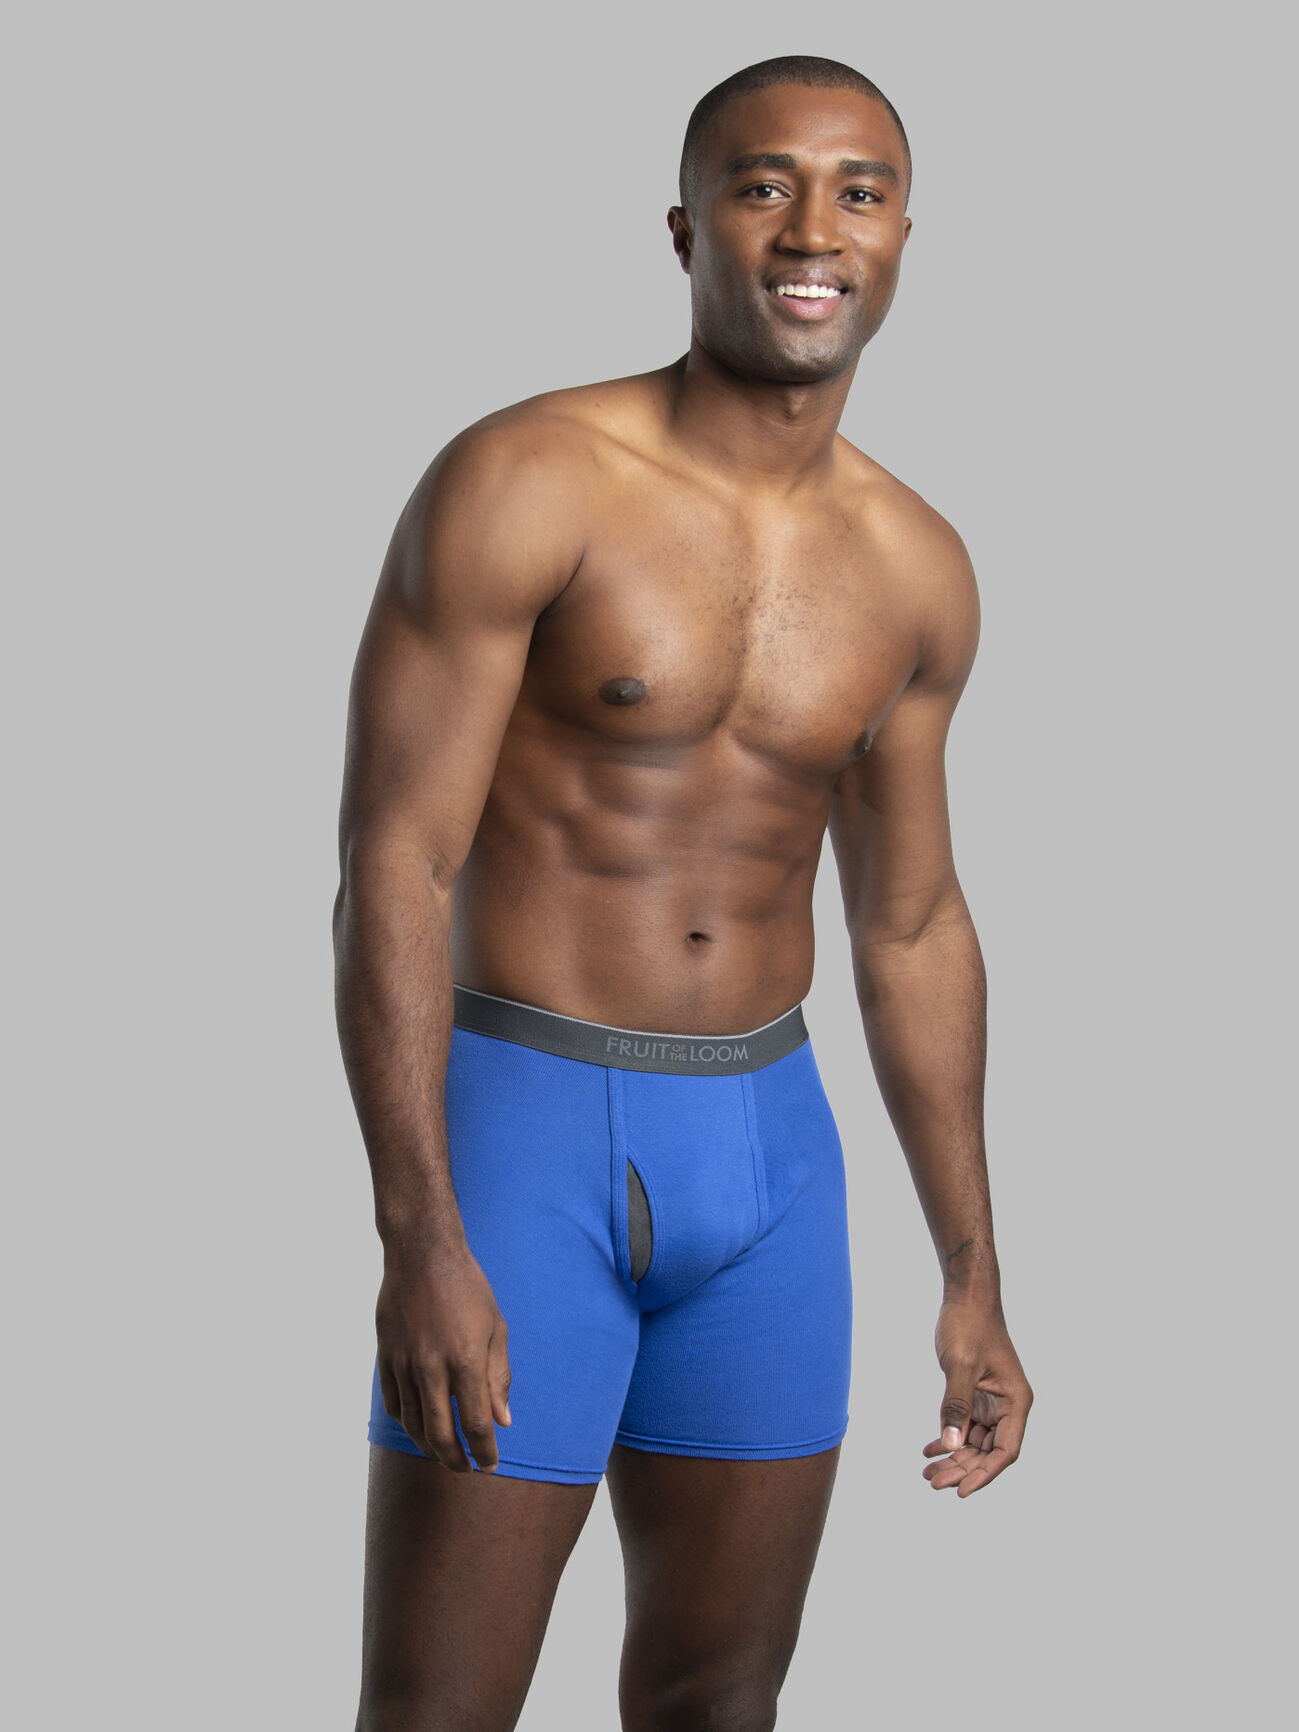 Mens Boxer Briefs-Premium Underwear For Men Comfortable Boxer & Socks-Gift  Box